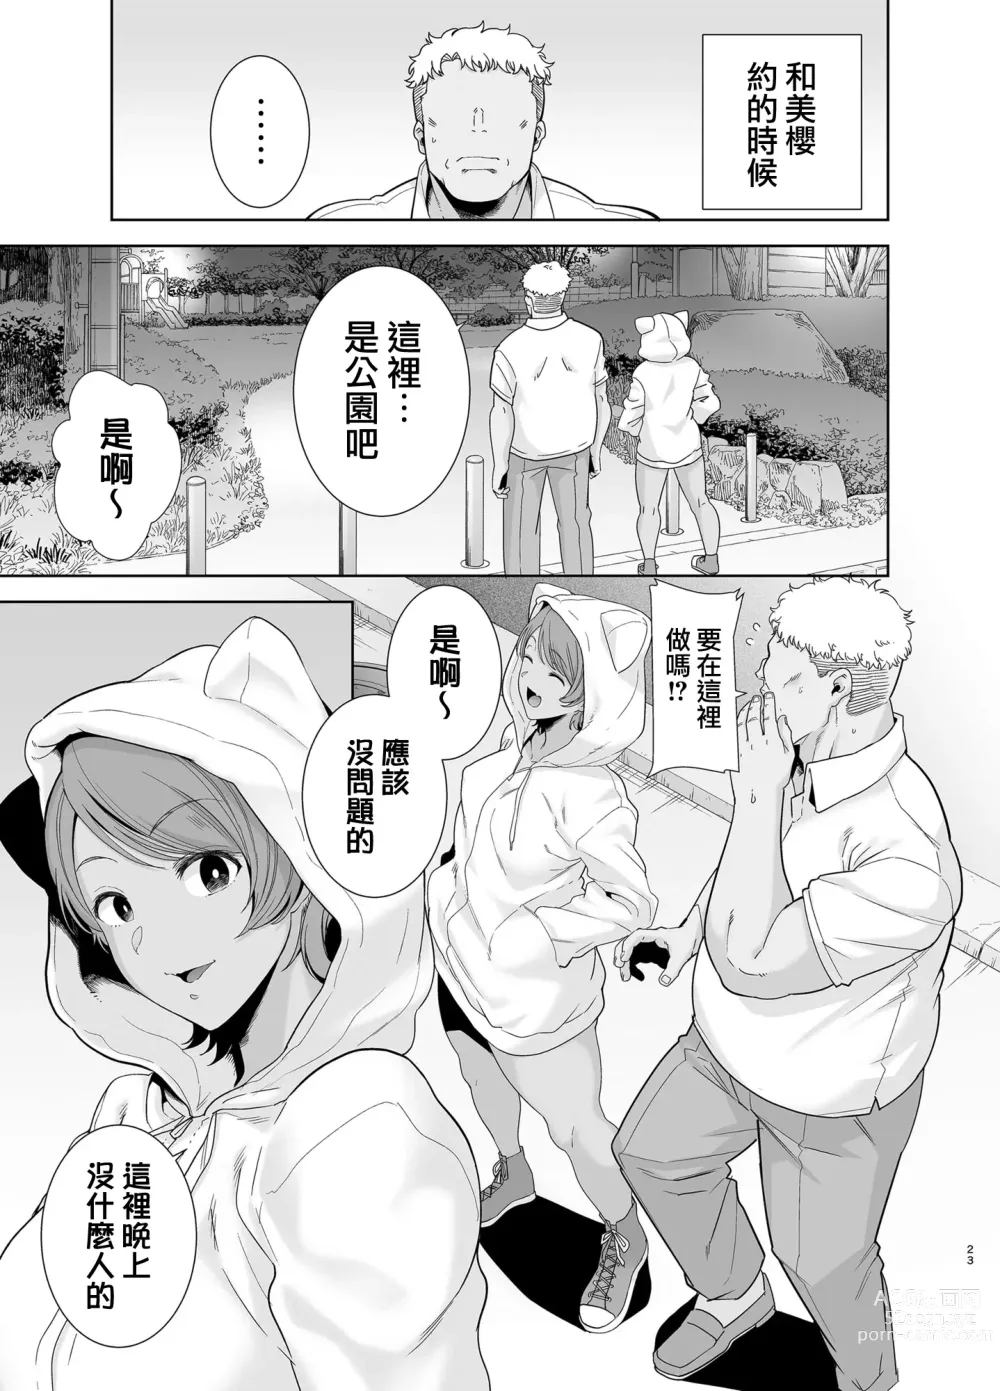 Page 22 of manga 聖華女学院高等部公認竿おじさん 5